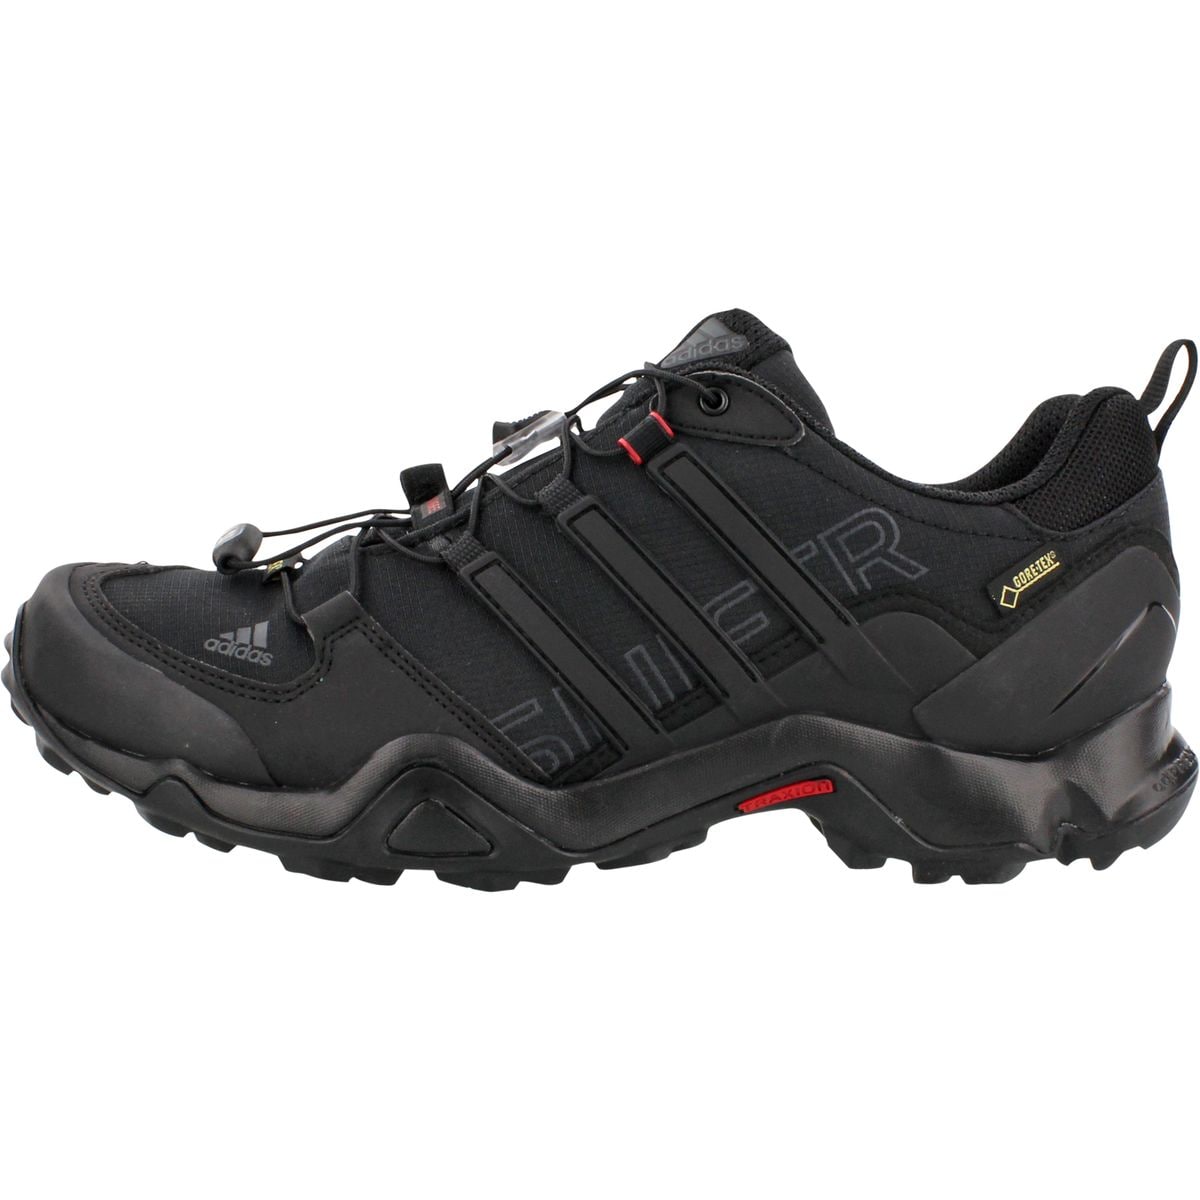 Adidas Outdoor Terrex Swift R GTX Hiking Shoe - Men's | eBay